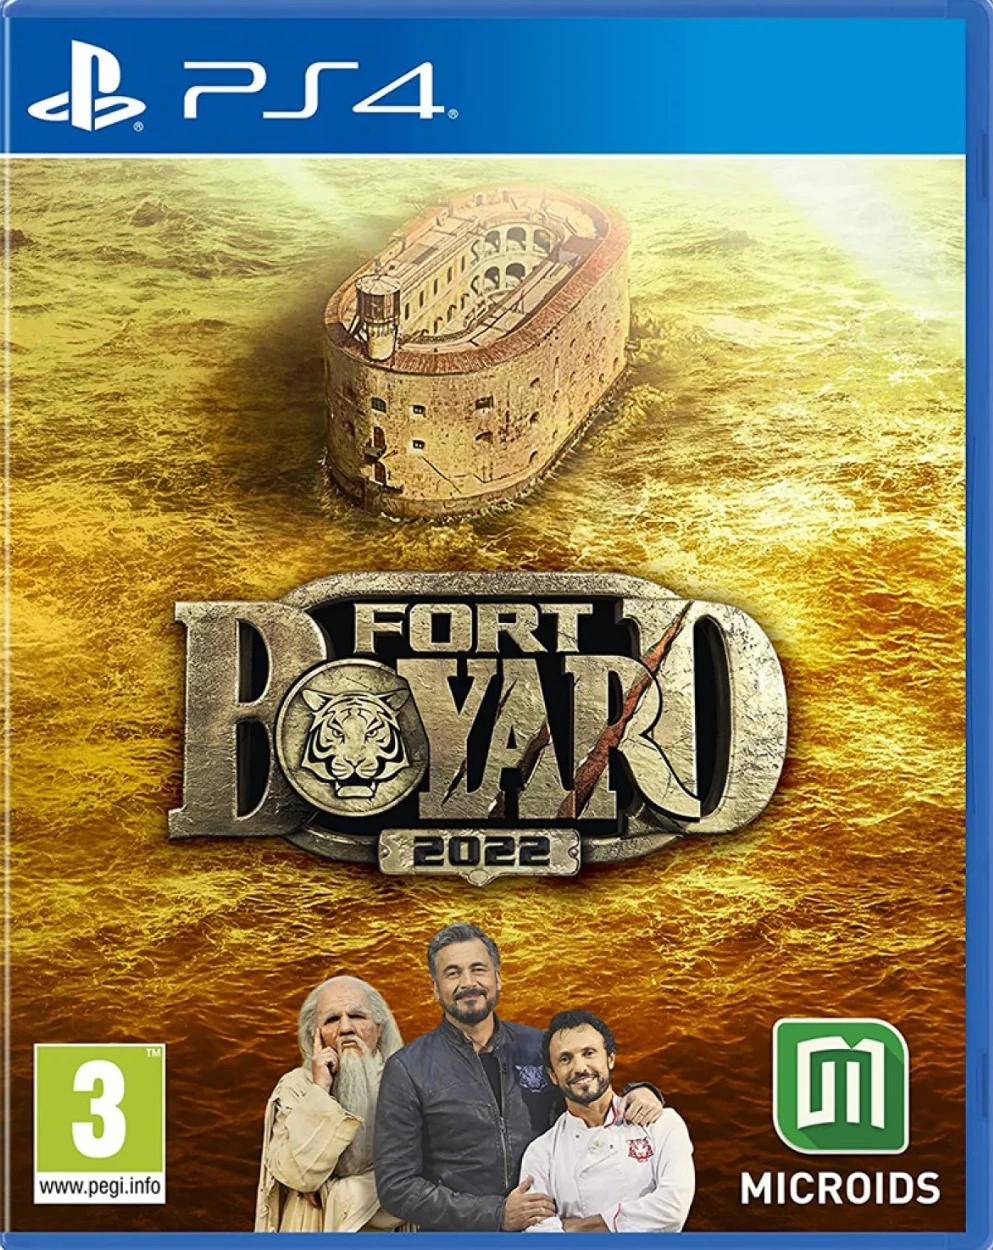 Fort Boyard 2022 (PS4), Microids